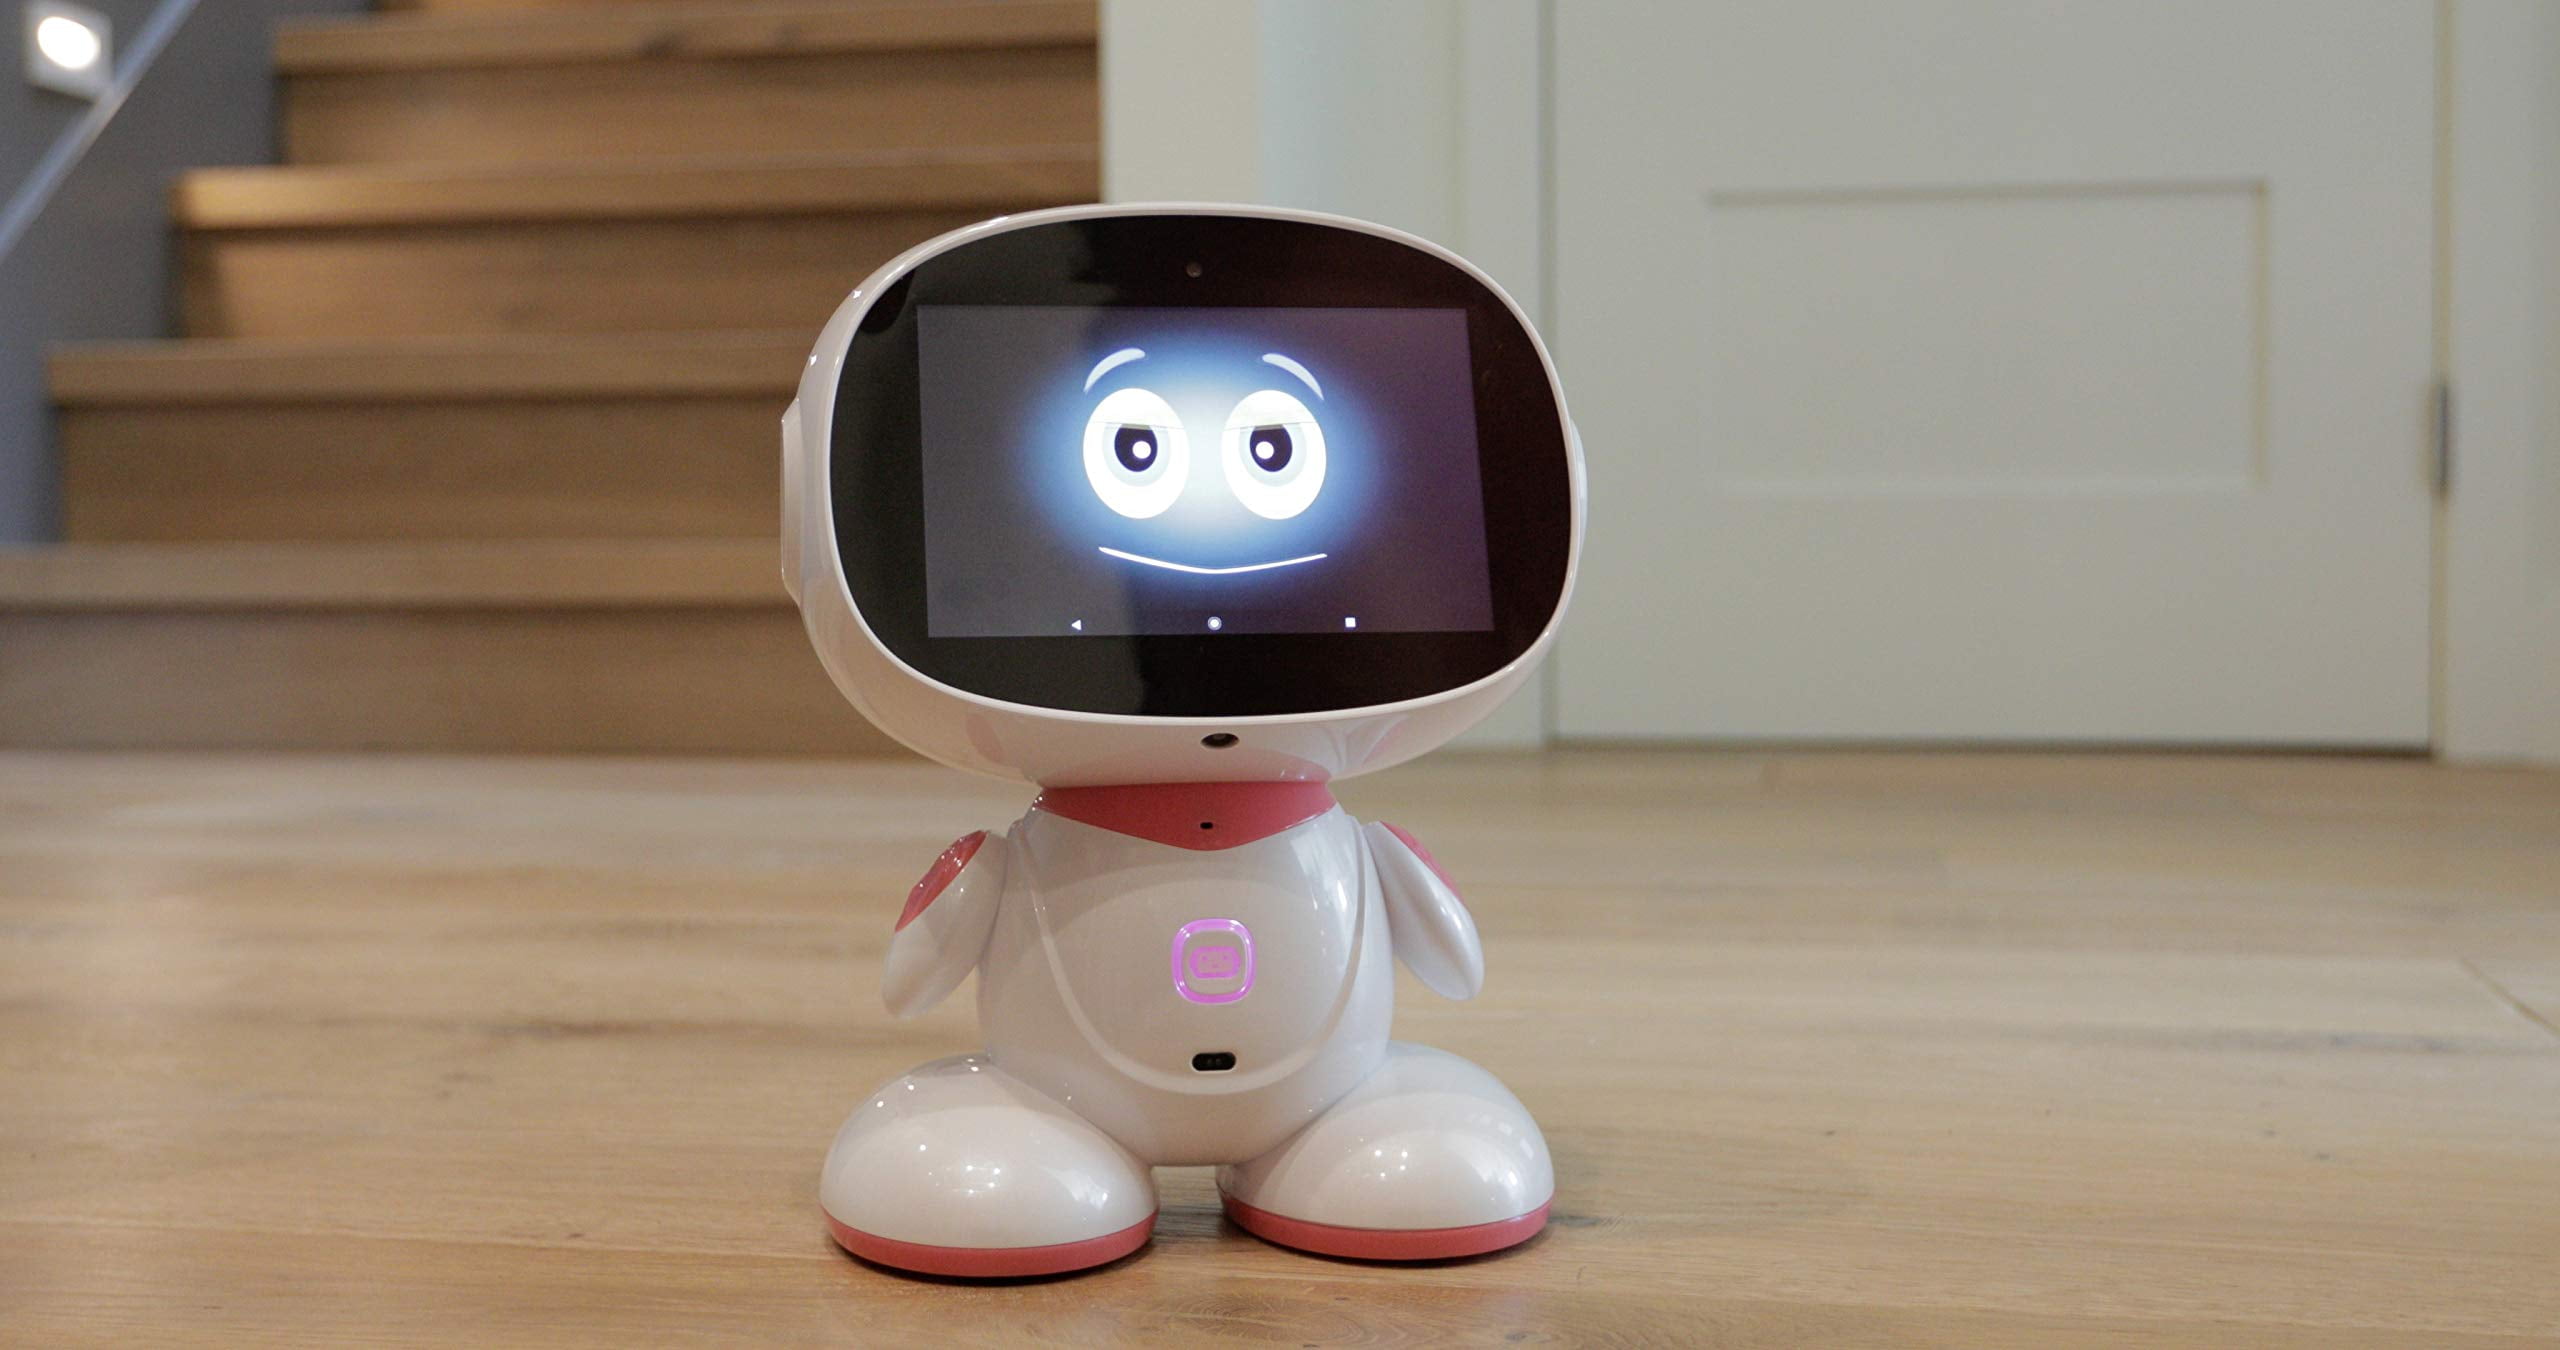 Misa-A kids best friendNext generation social robot - Sinergia